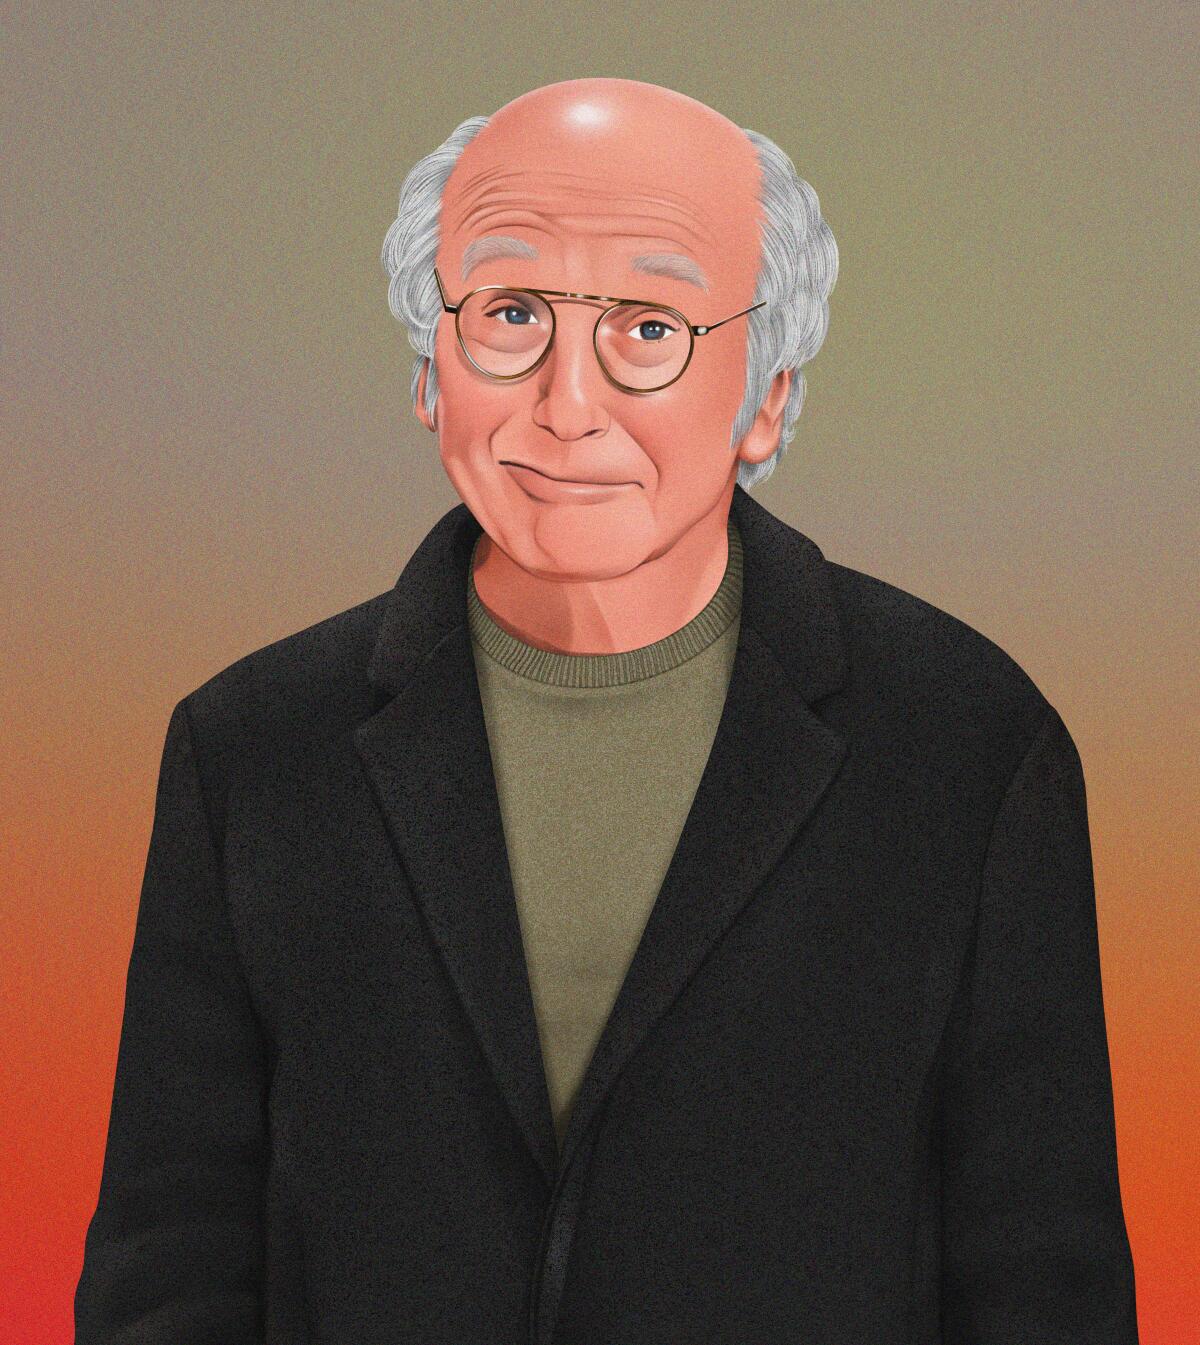 An illustration of Larry David